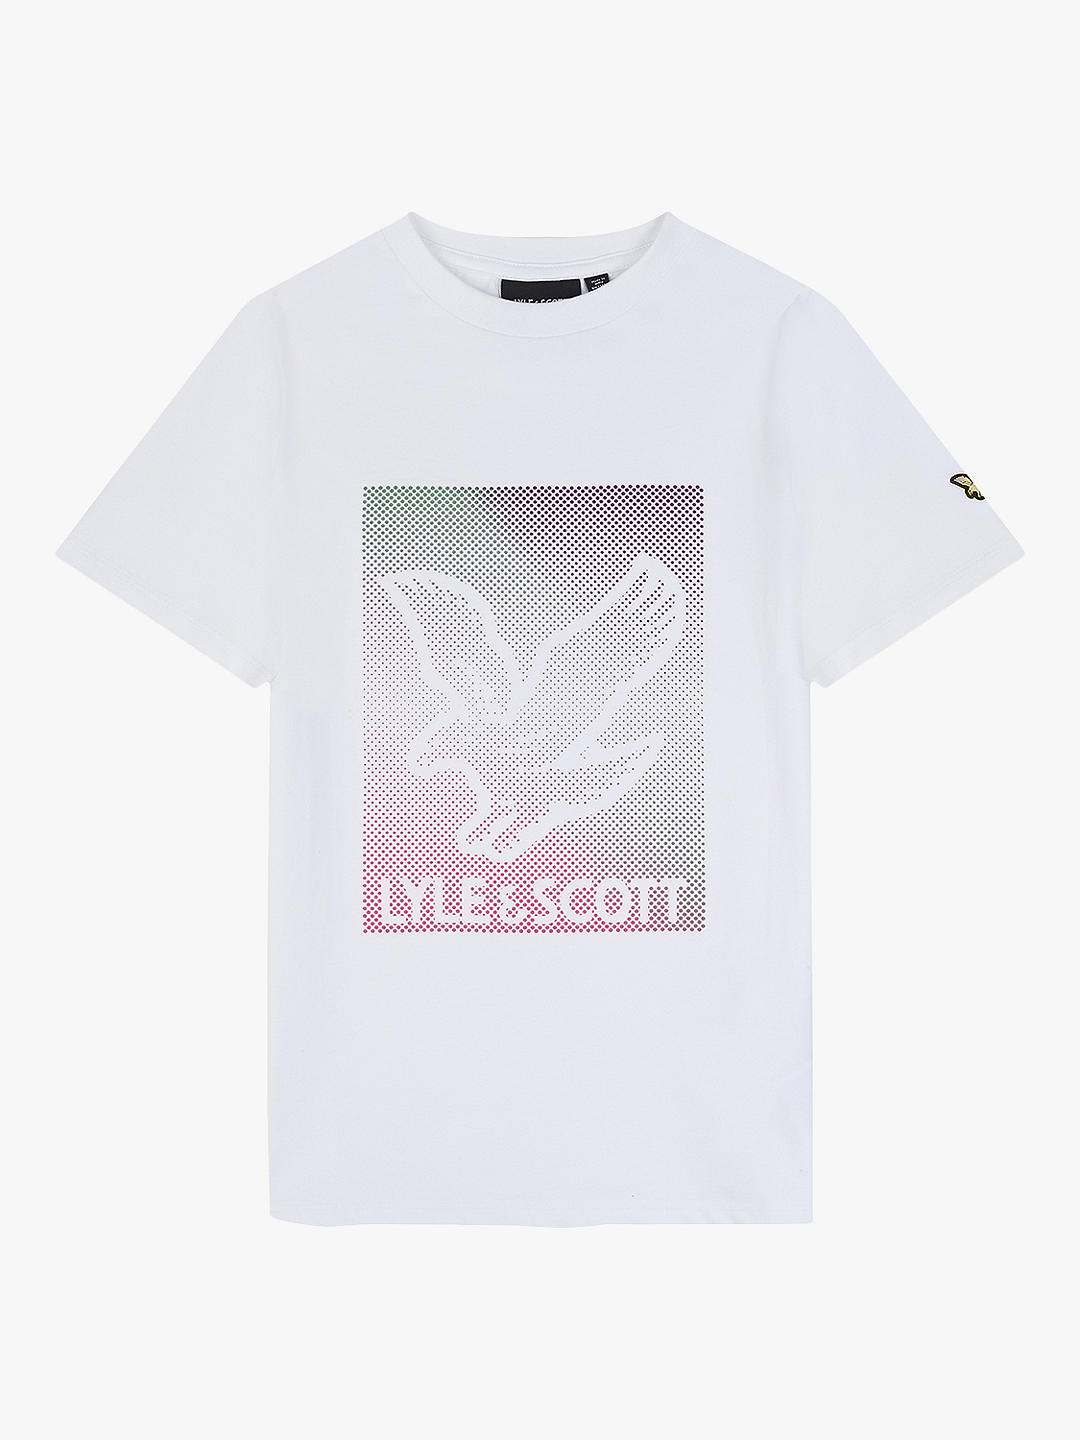 Lyle & Scott Kids' Dotted Eagle Graphic T-Shirt, White/Multi